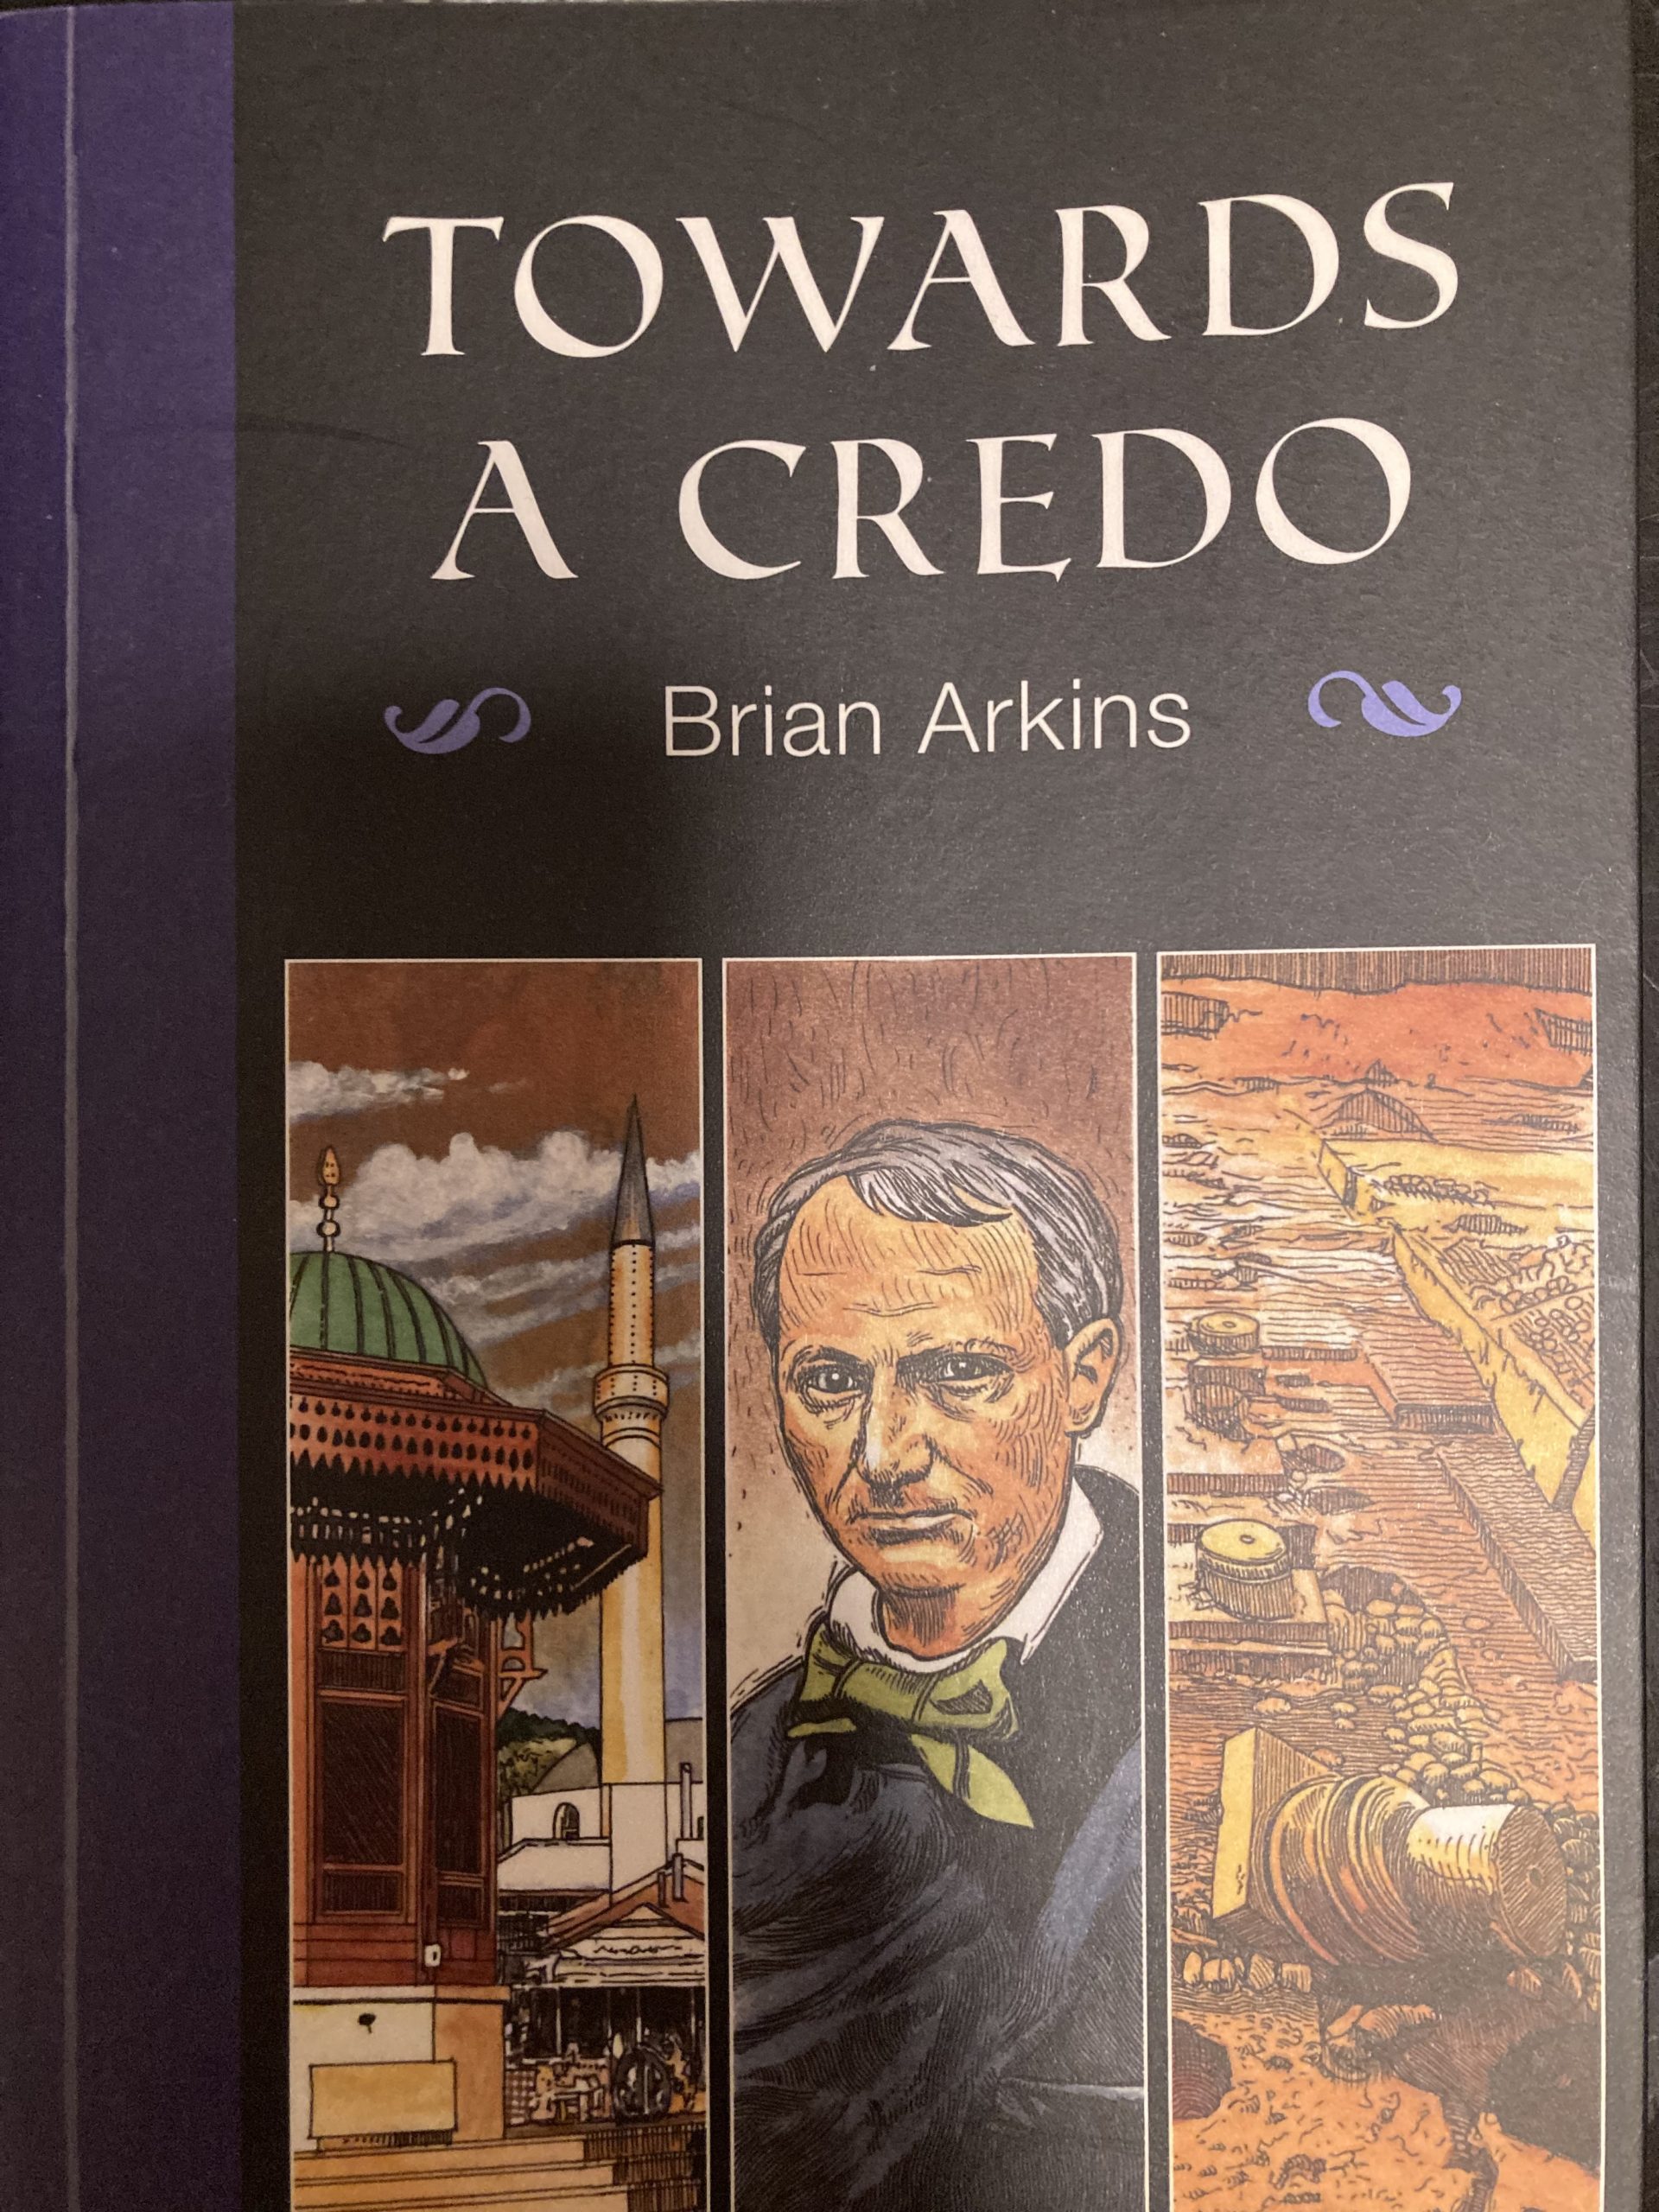 Toward A Credo by Brian Arkins